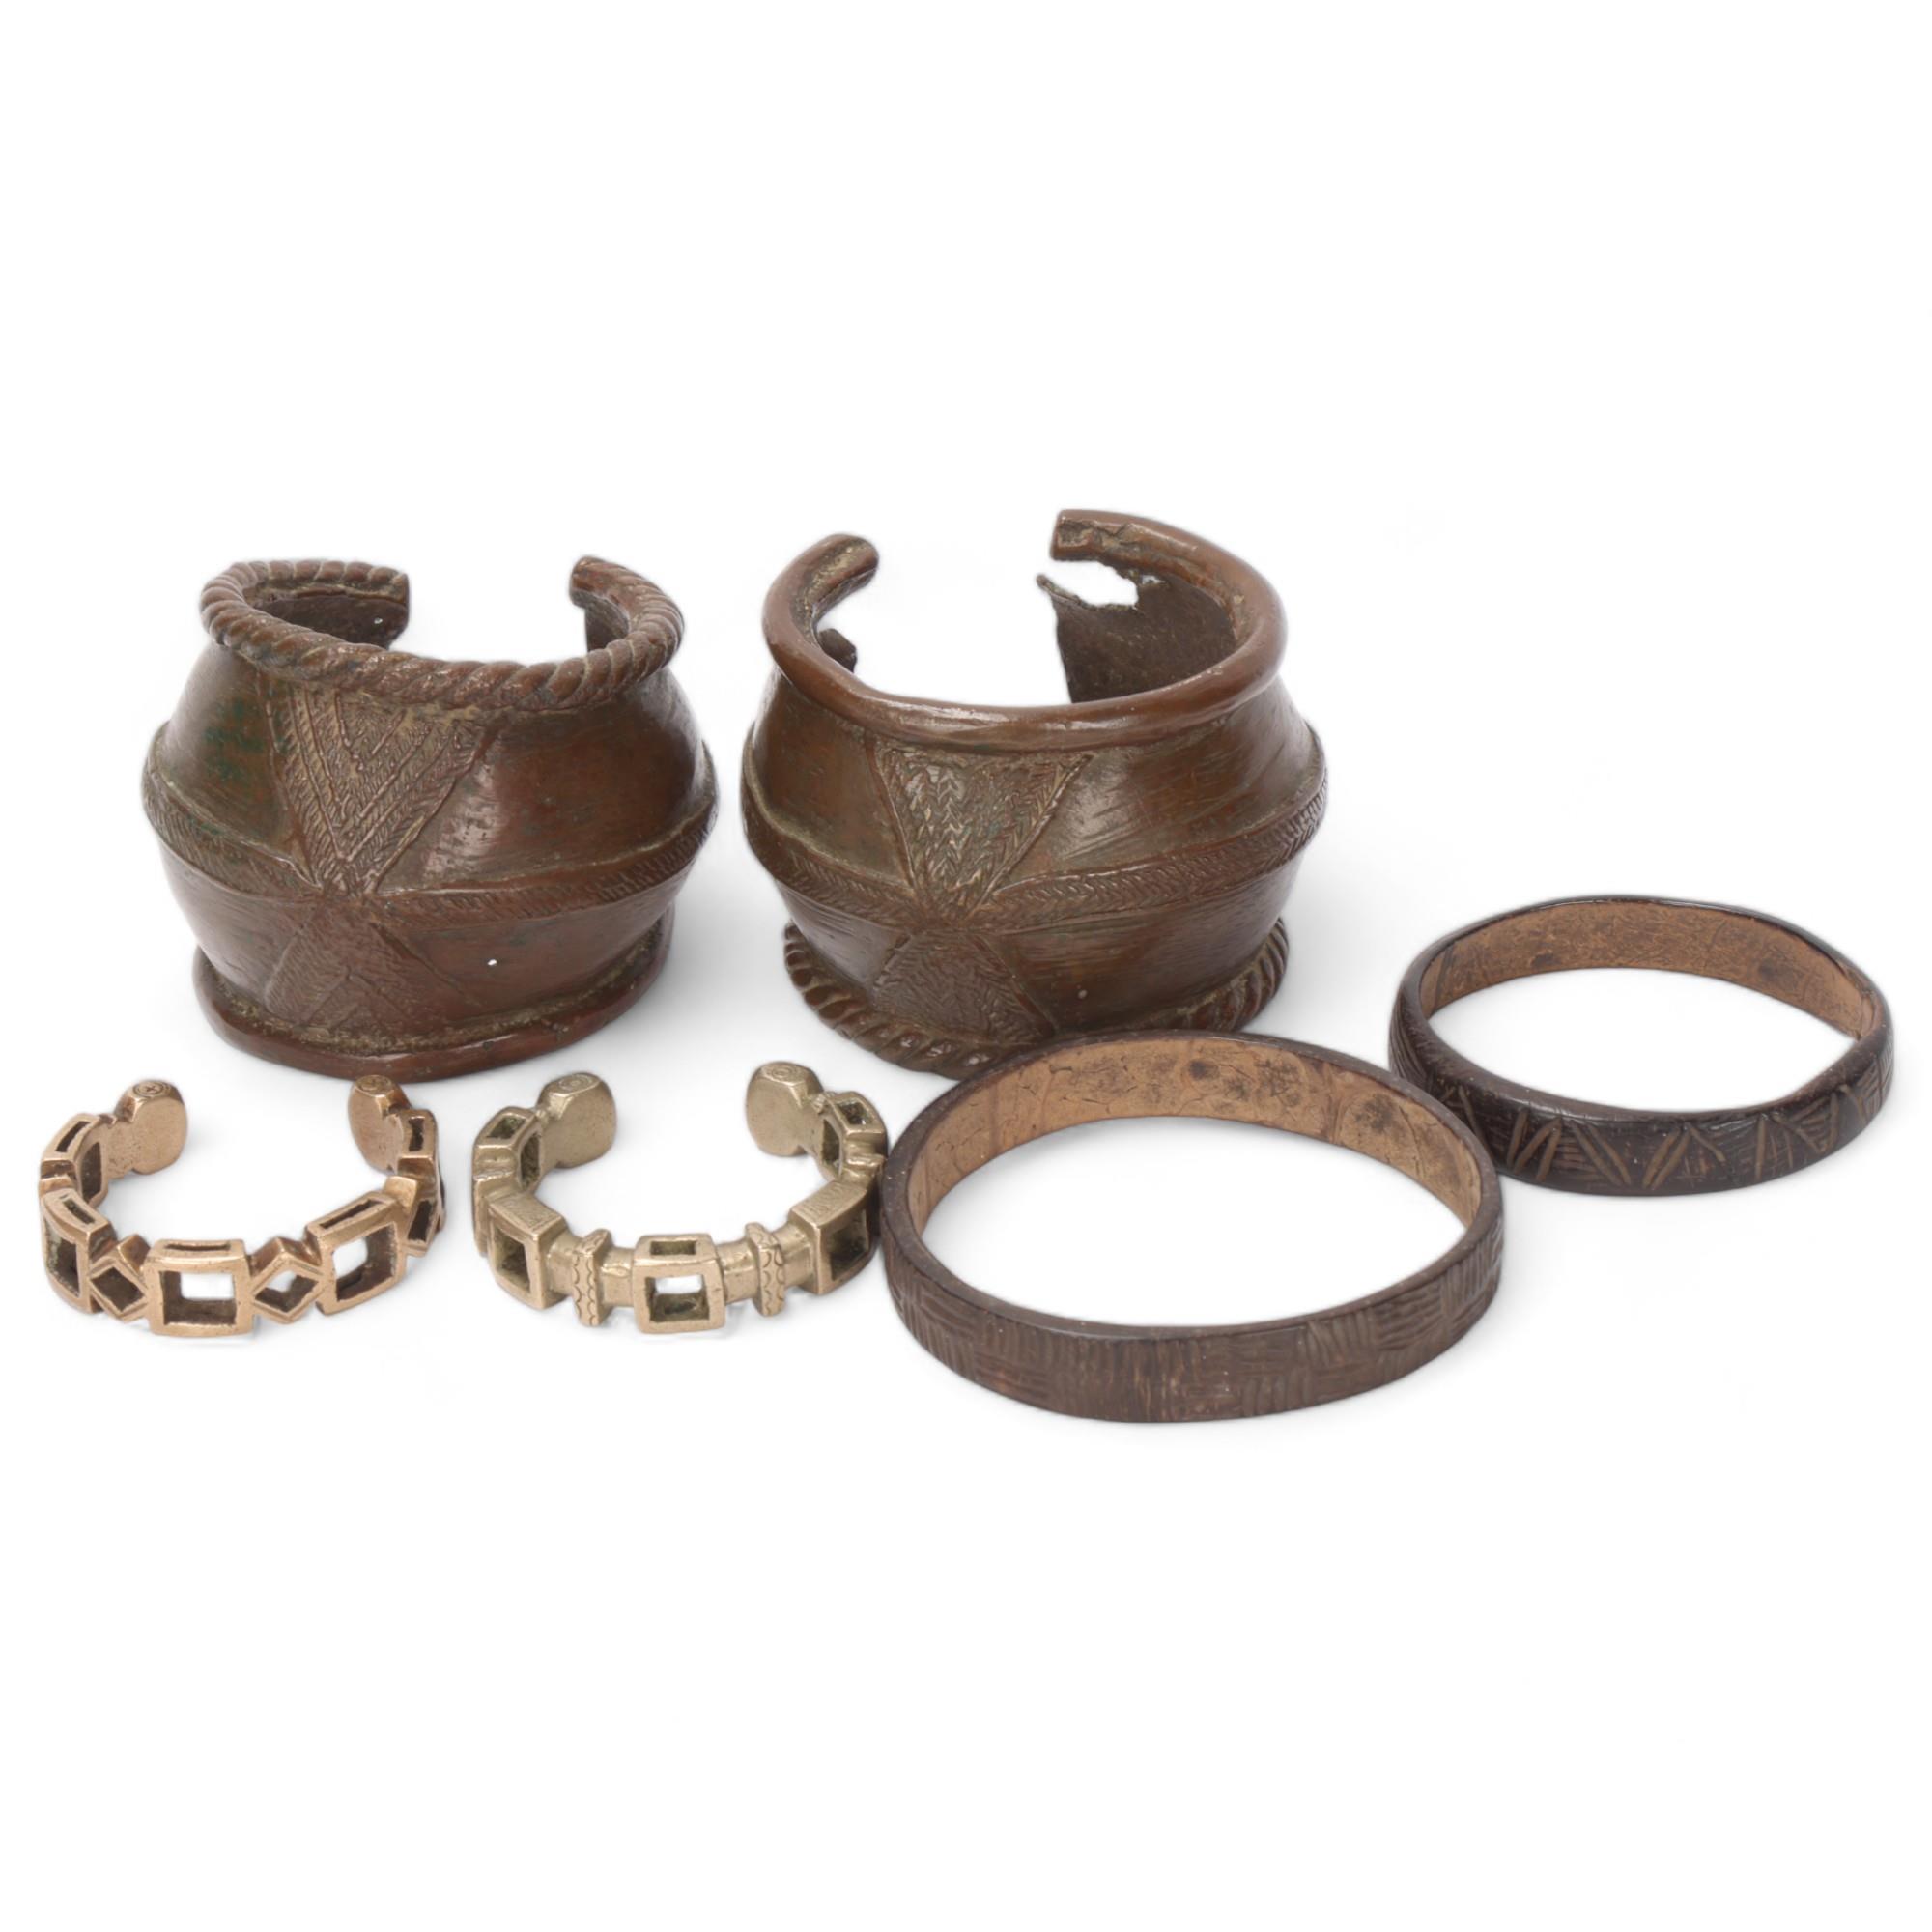 Pair of African bronze bracelets, 2 nickel currency bracelets, and 2 elephant hide bangles